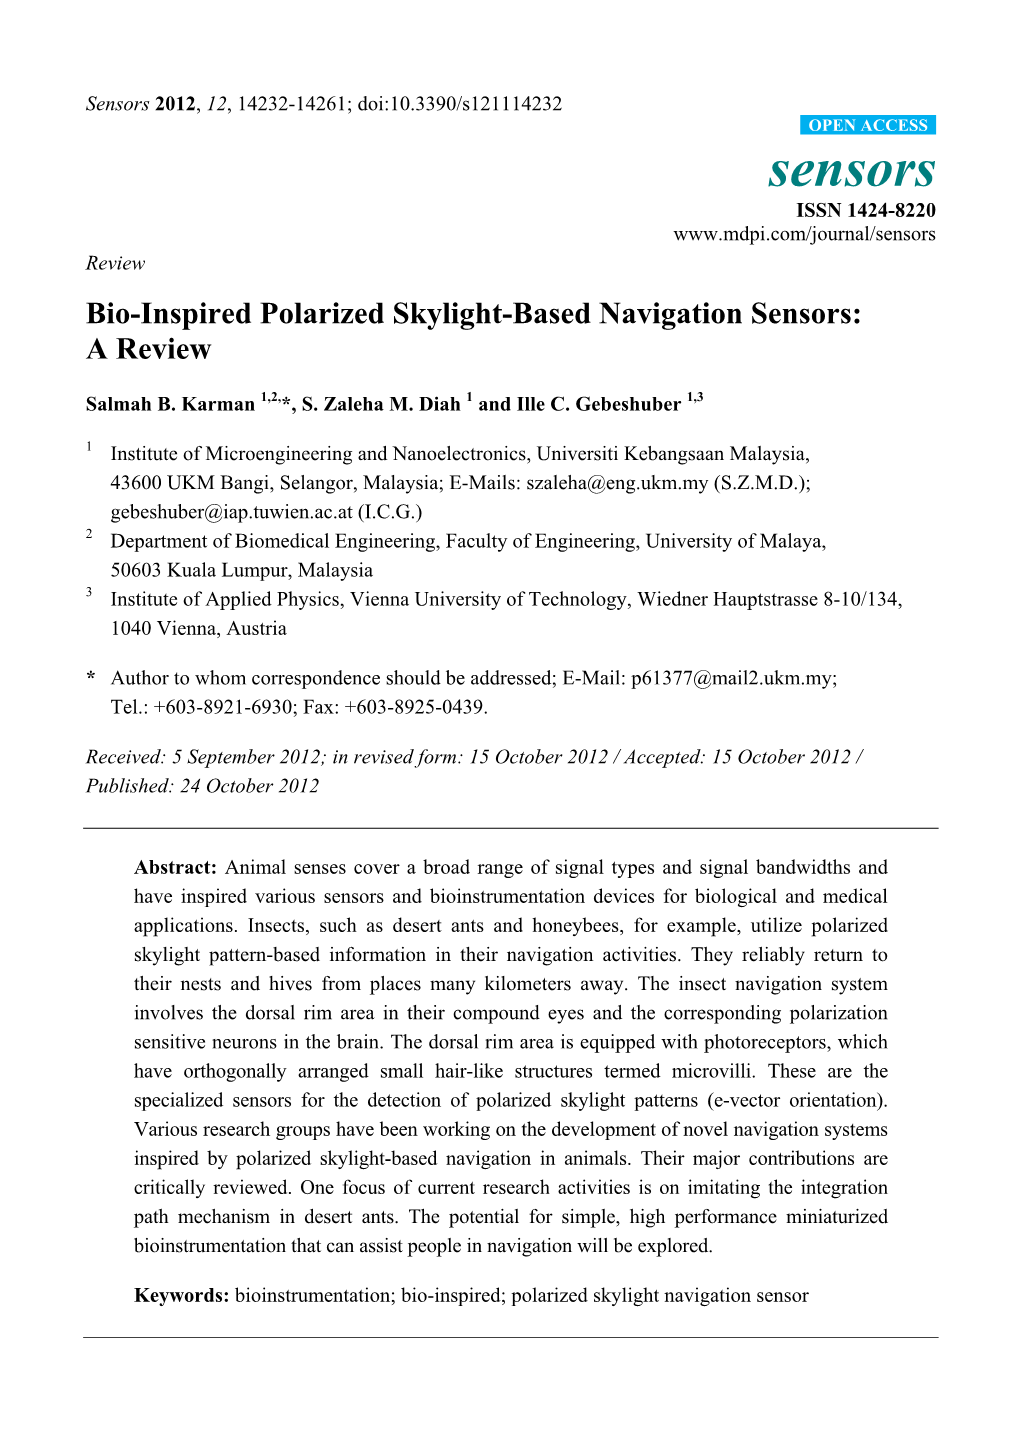 Bio-Inspired Polarized Skylight-Based Navigation Sensors: a Review